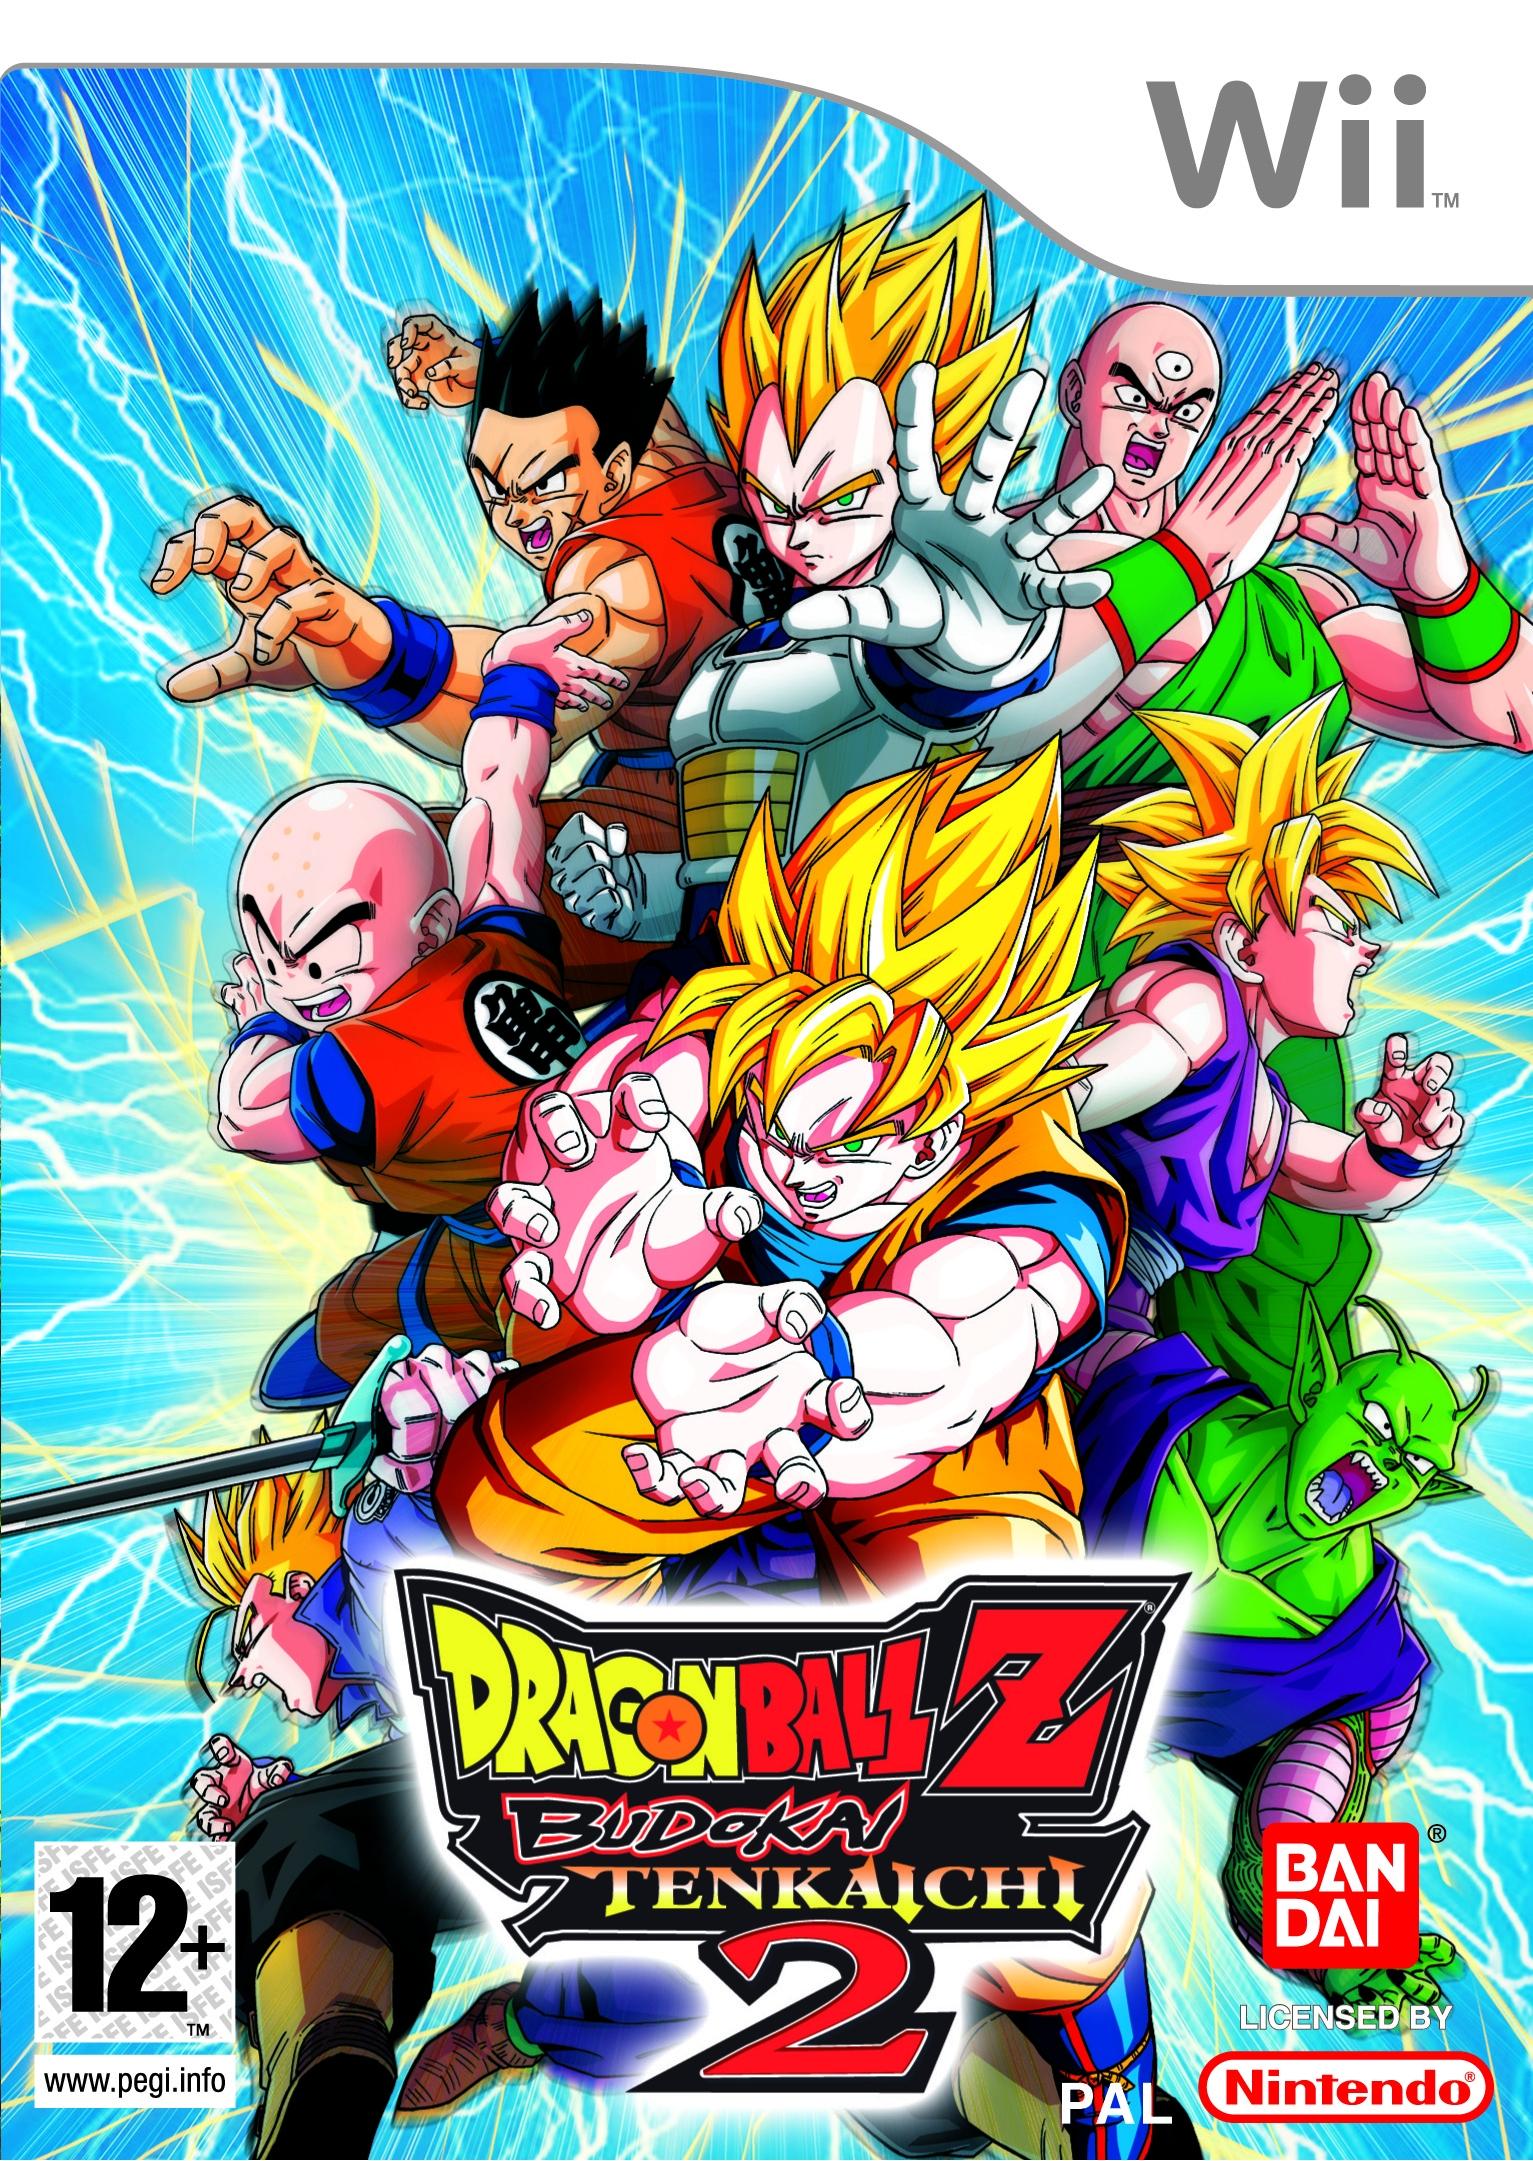 Shinkan dueña aprobar Dragon Ball Z: Budokai Tenkaichi 2 | Dragon Ball Wiki Hispano | Fandom